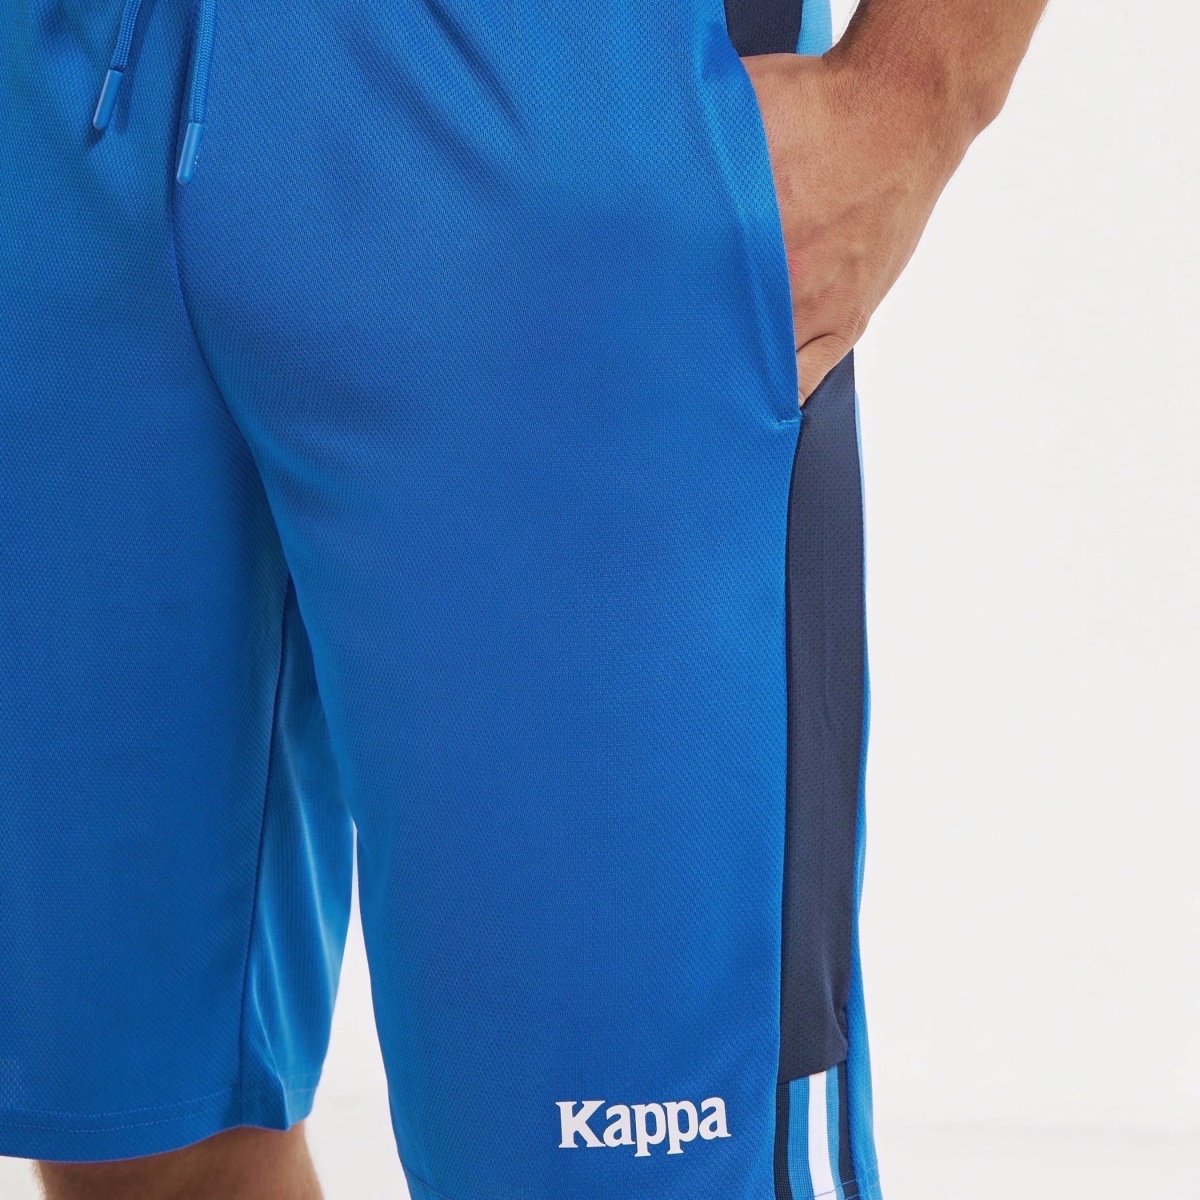 Football Theme Stripe Shorts with Pockets